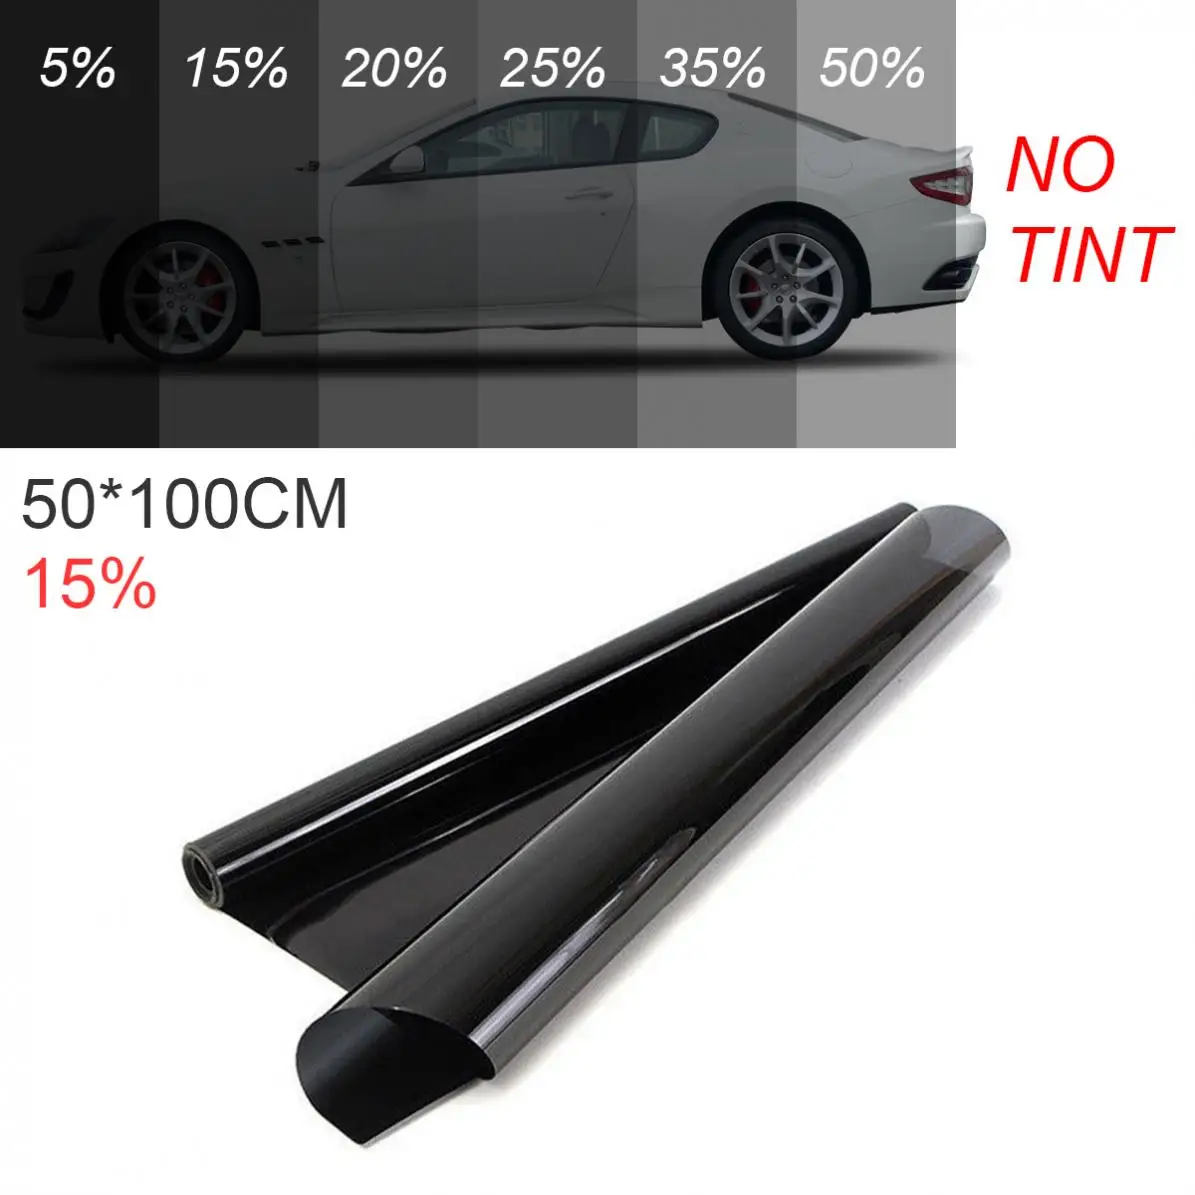 

15% Translucent 50 x 100CM PVC Thickening Car Curtain Windshield Sun Shade UV Protection Side Window Film VLT Solar Sticker